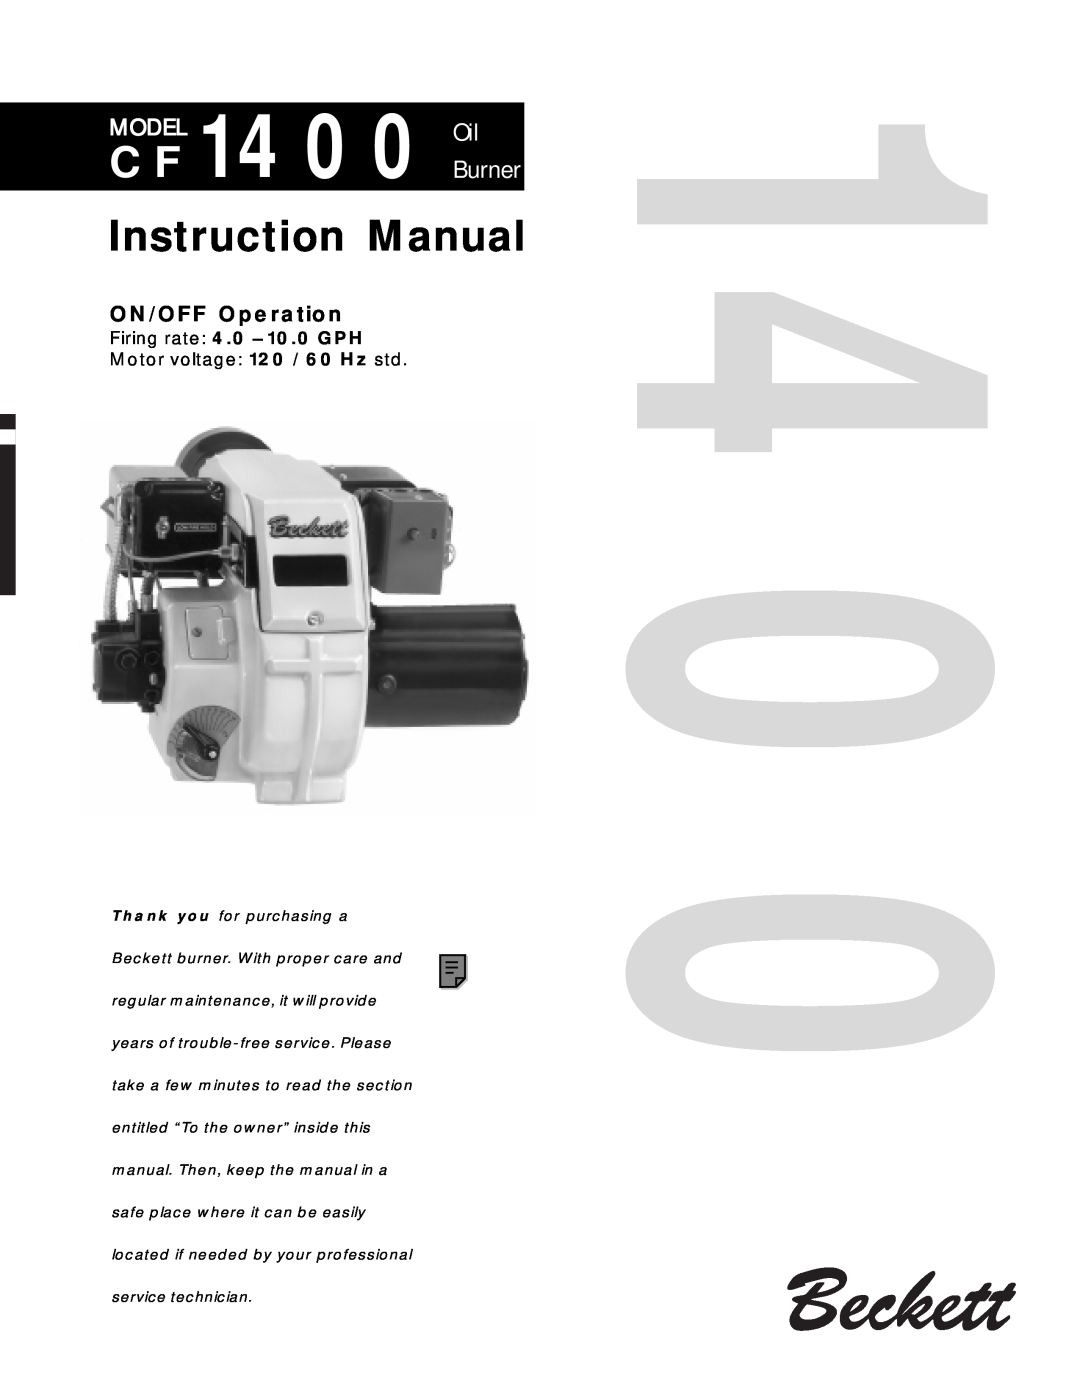 Beckett CF 1400 instruction manual ON/OFF Operation, Firing rate 4.0 - 10.0 GPH, Motor voltage 120 / 60 Hz std, CF Burner 